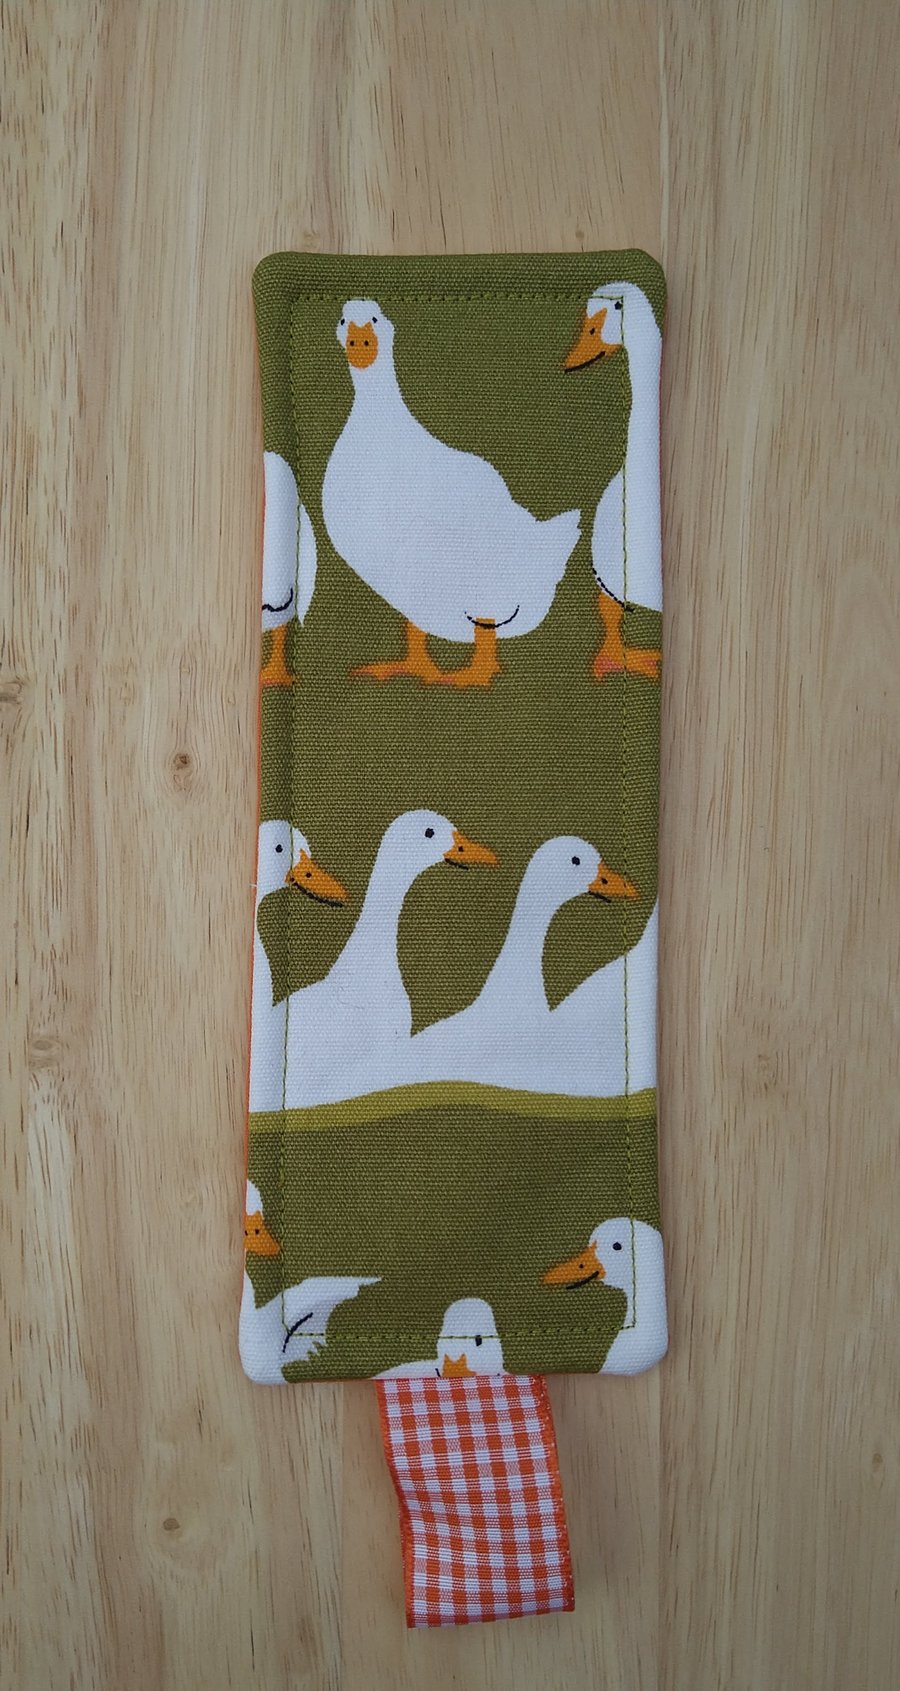 Bookmark with ducks